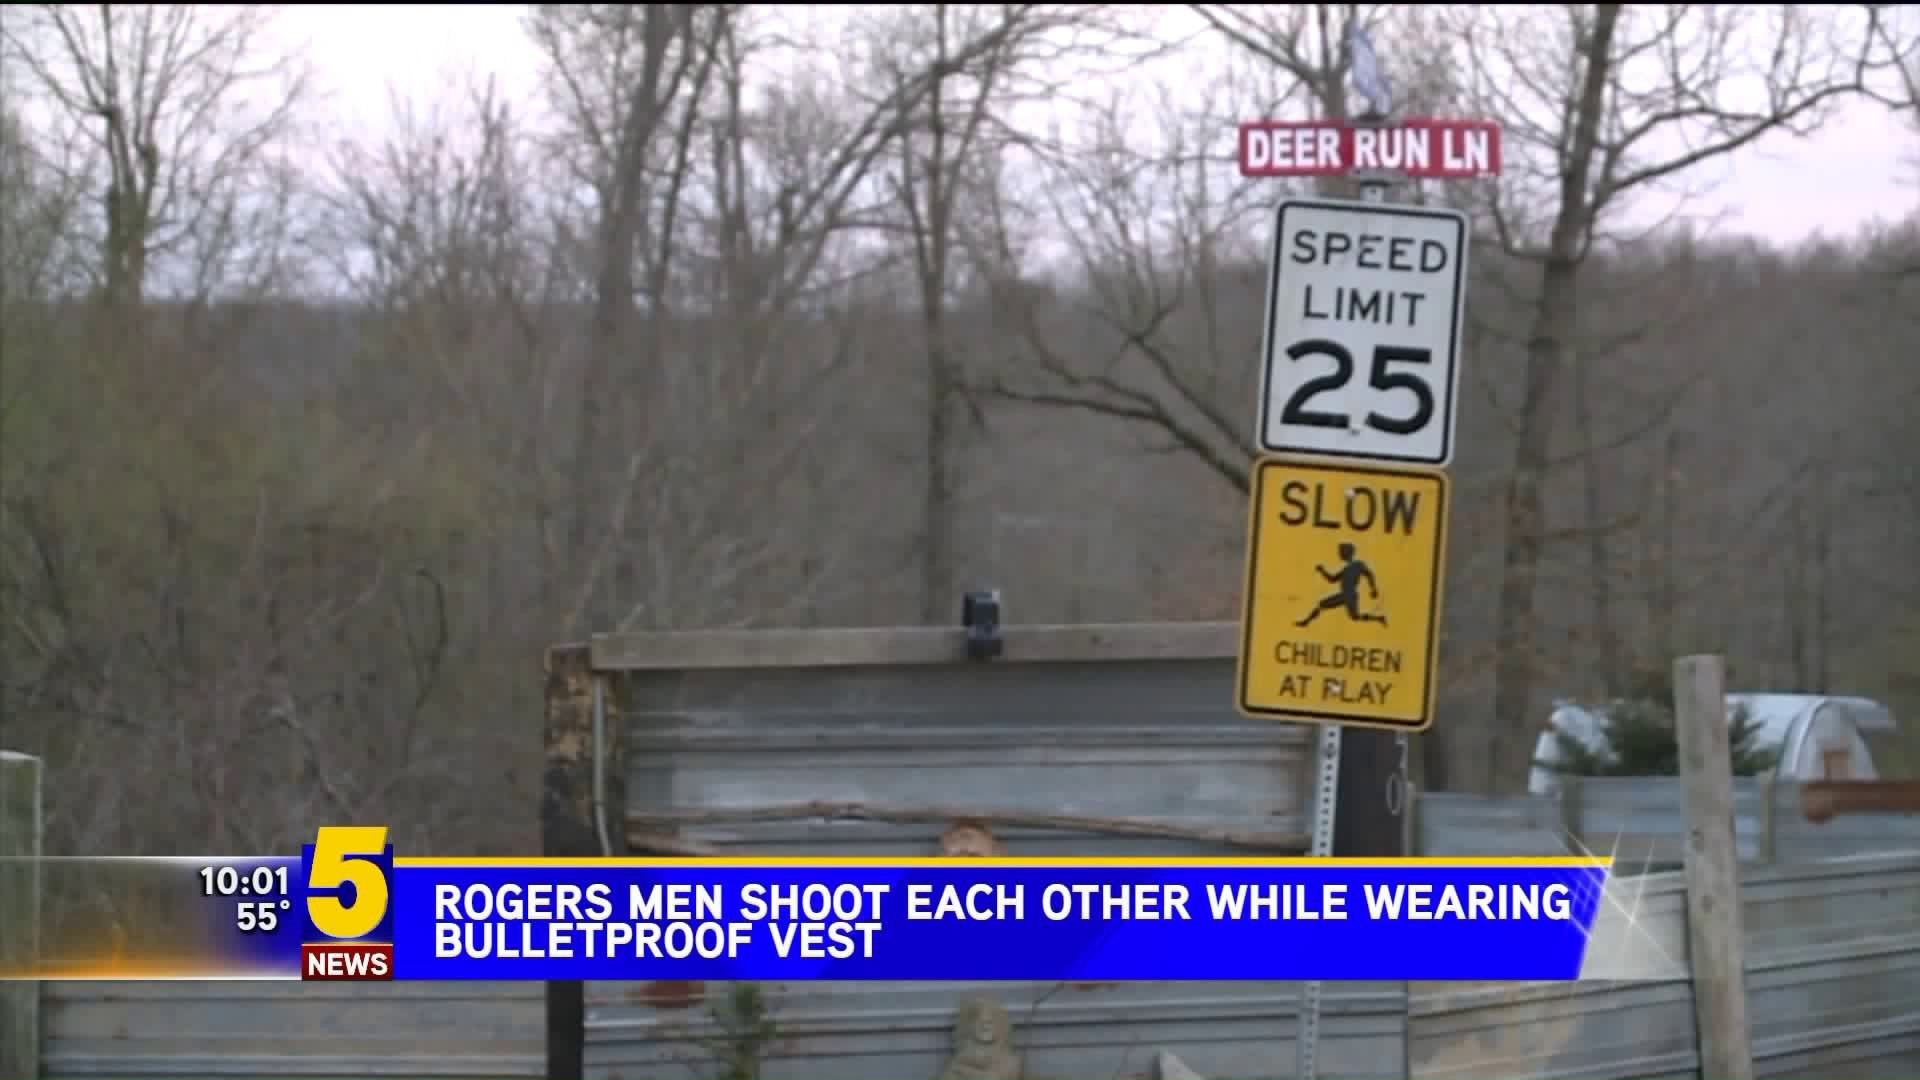 Rogers Men Shoot Each Other While Wearing Bulletproof Vest